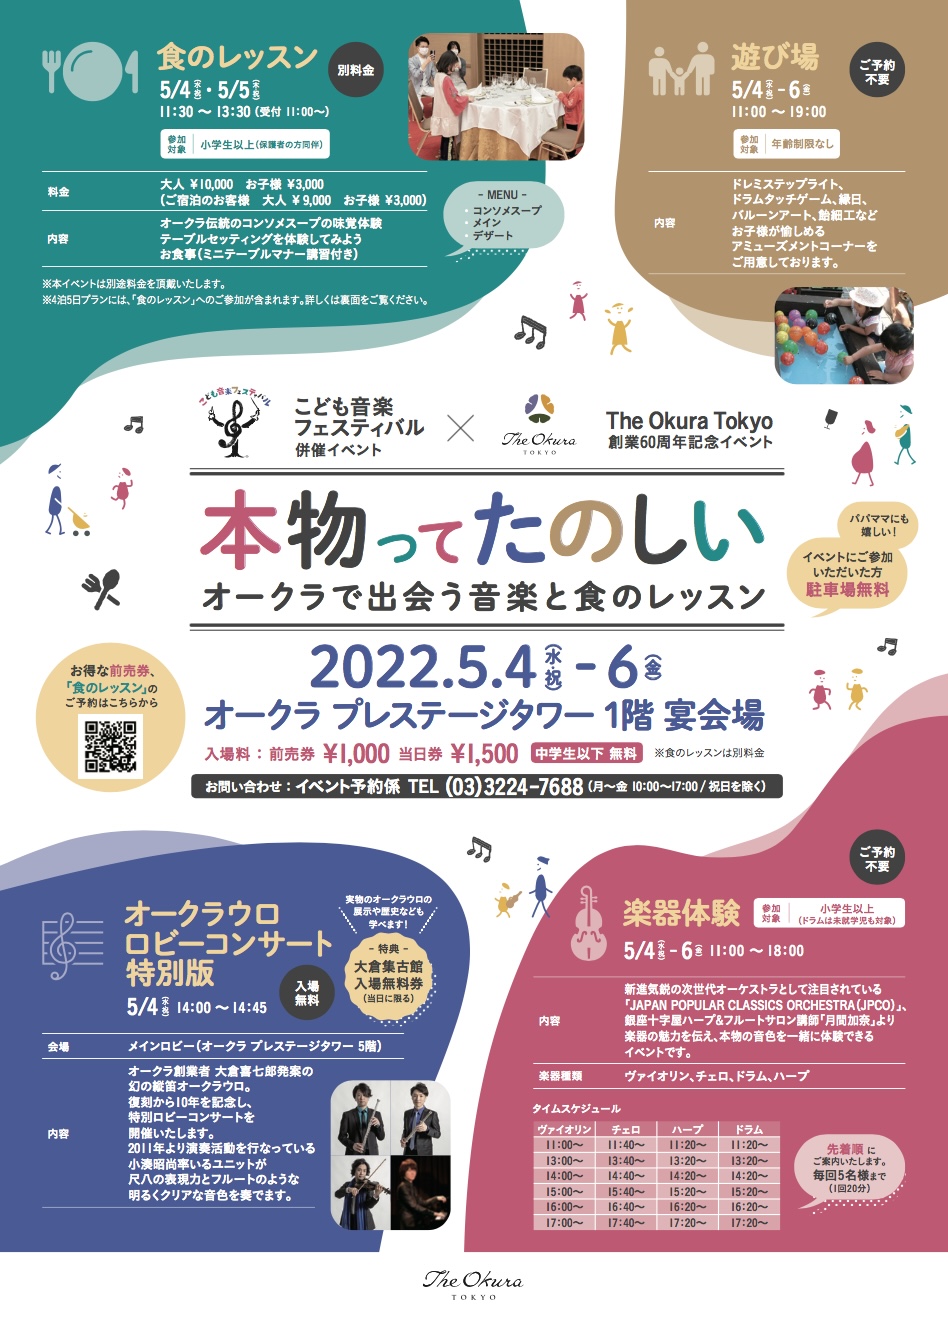 2022.5.4-6  The Okura Tokyo  創業60周年記念イベント『本物ってたのしい』